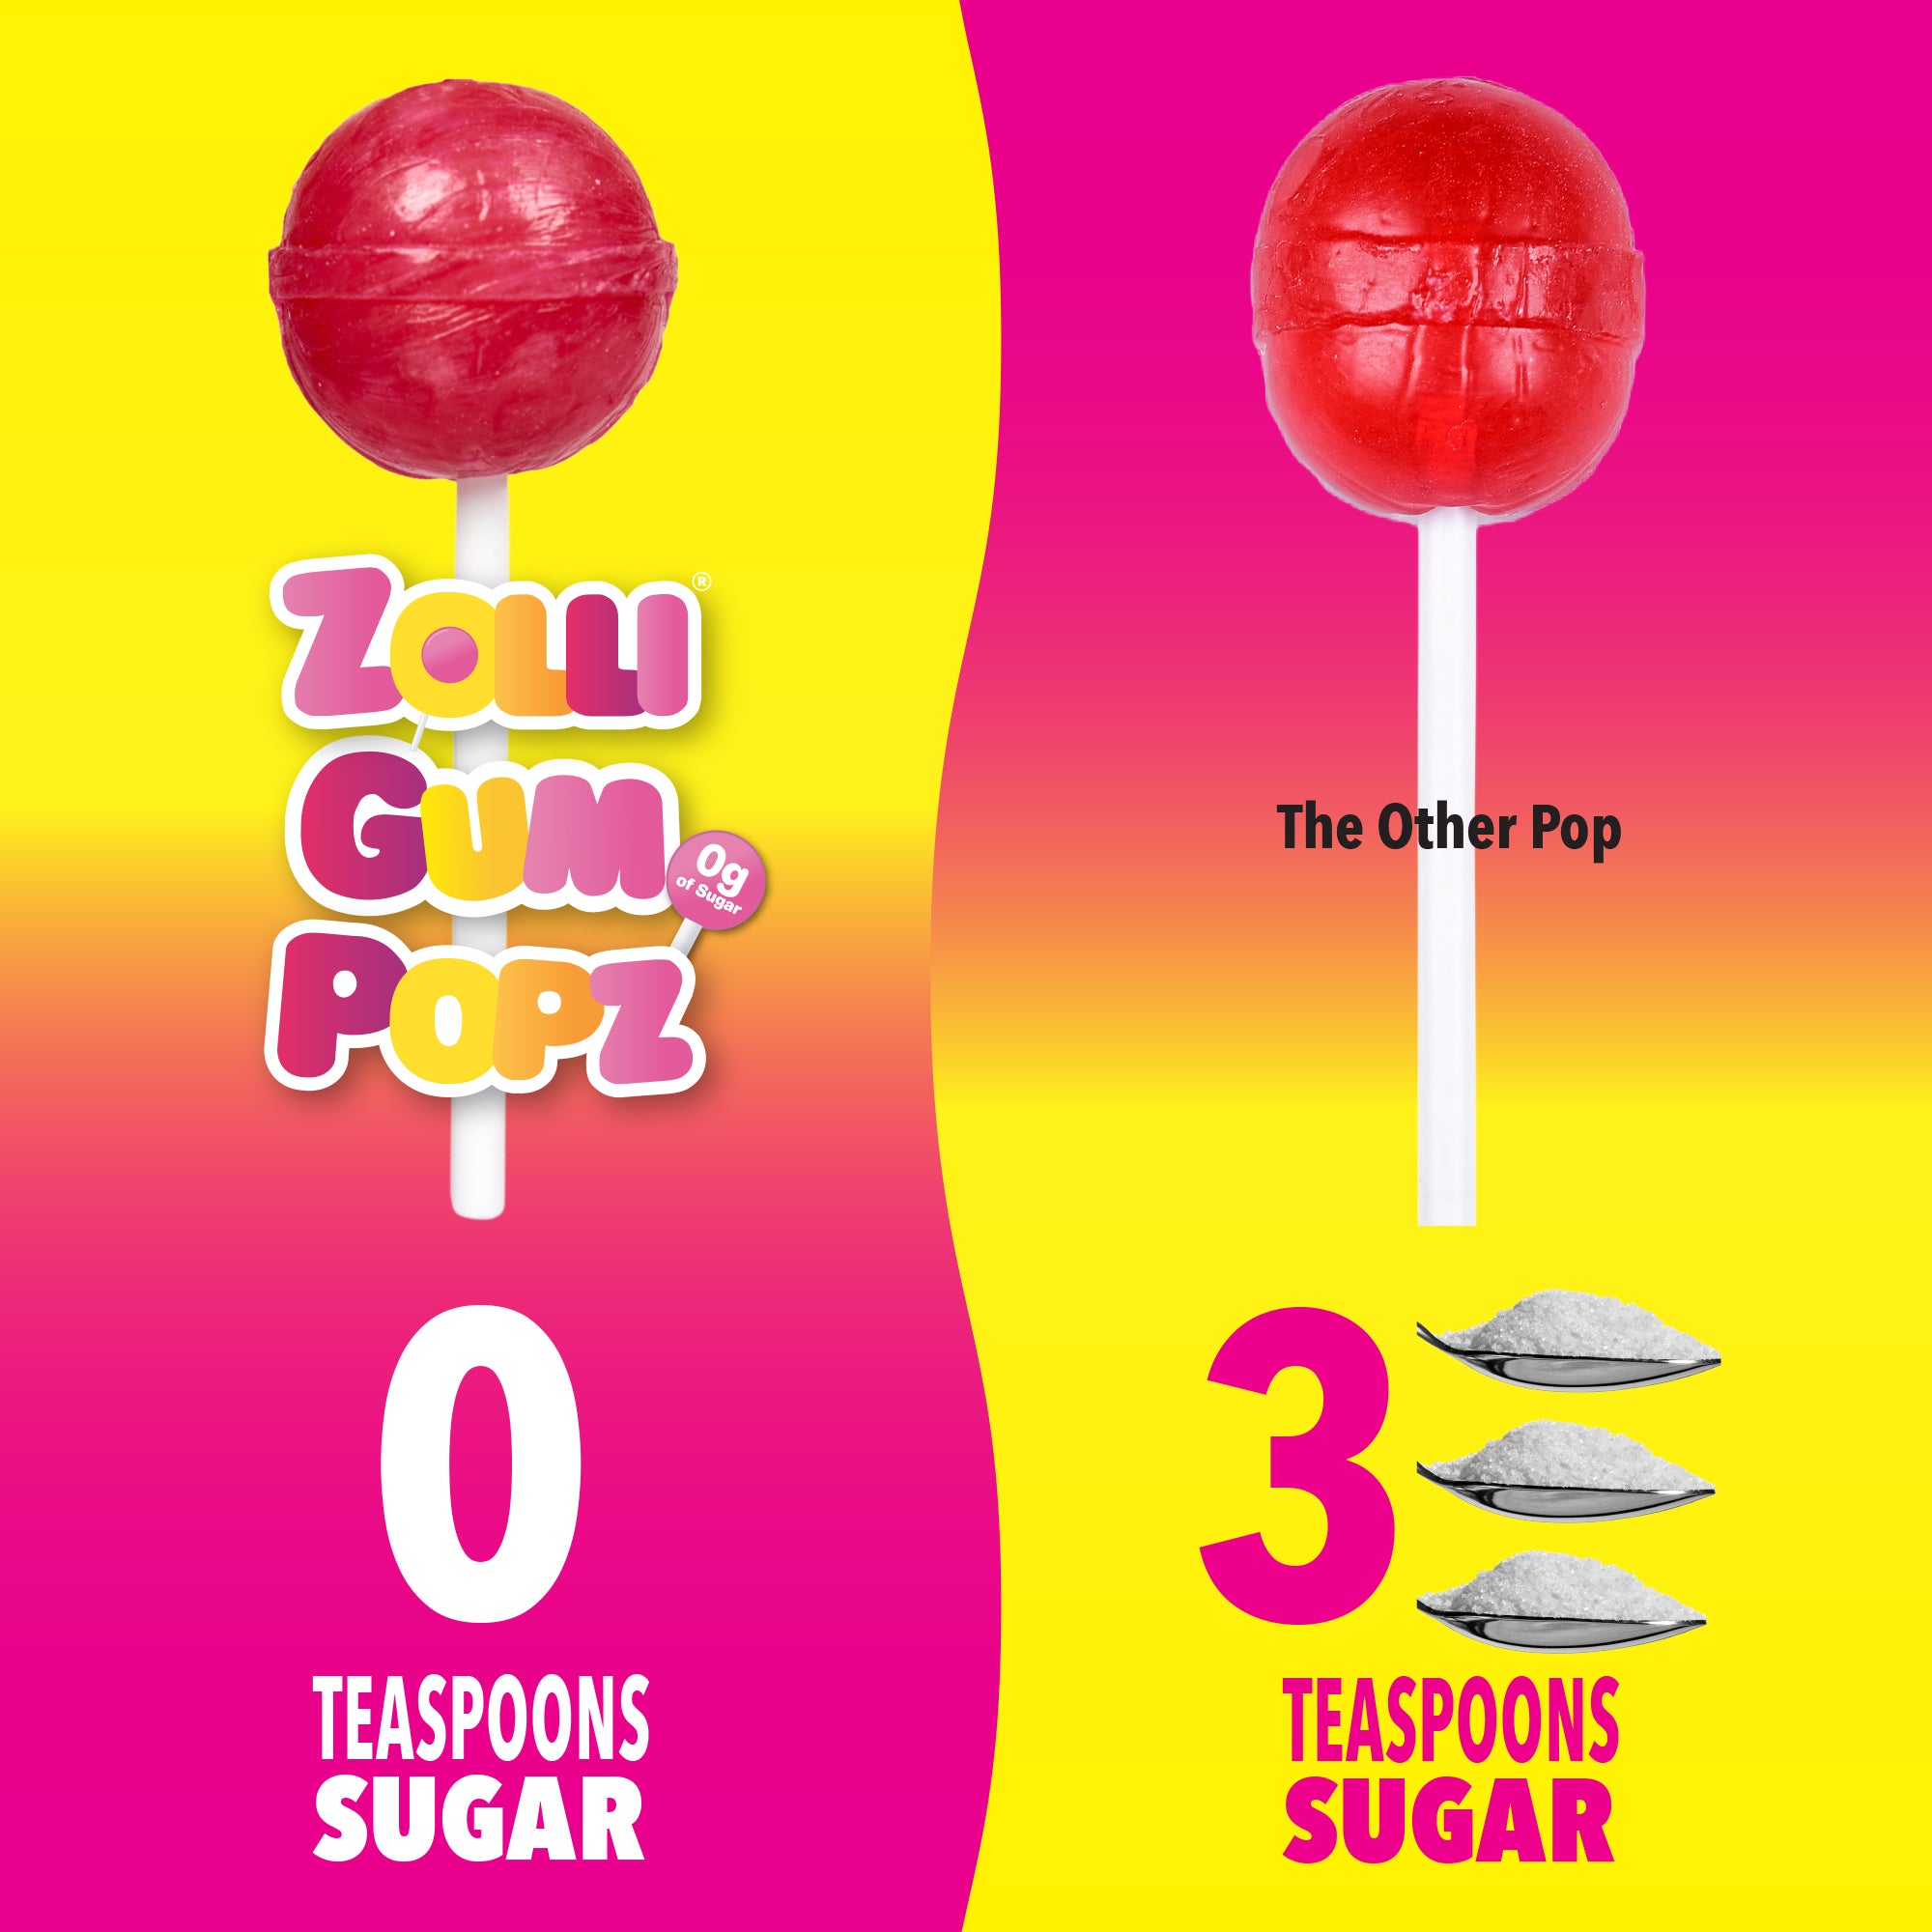 Zolli Gum Popz have 0 teaspoons of sugar. The other Gum pops have 3 teaspoons of sugar.